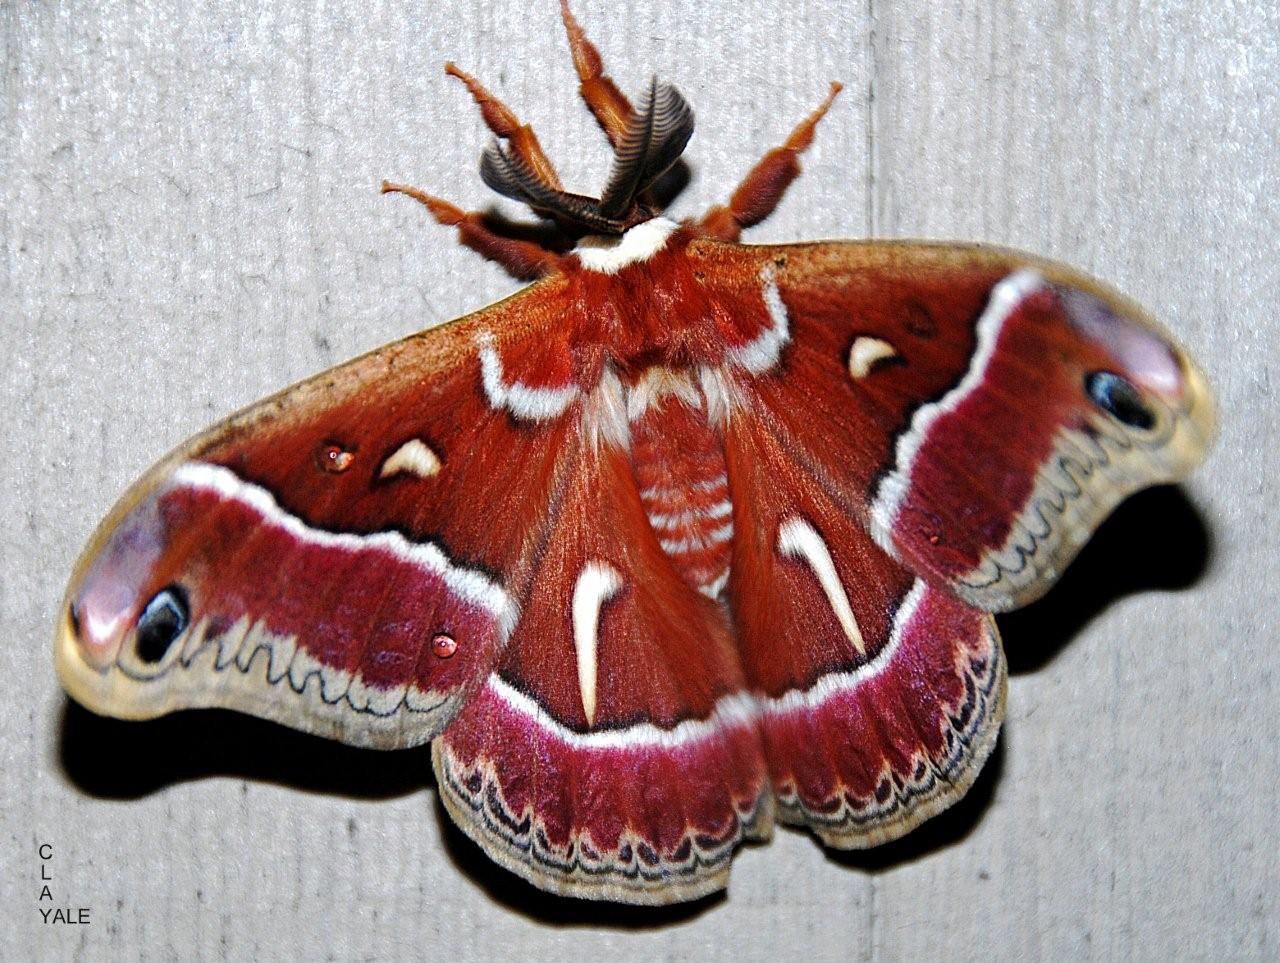 Ceanothus silkmoth Hyalophora euryalus (Boisduval, 1855) | Butterflies ...